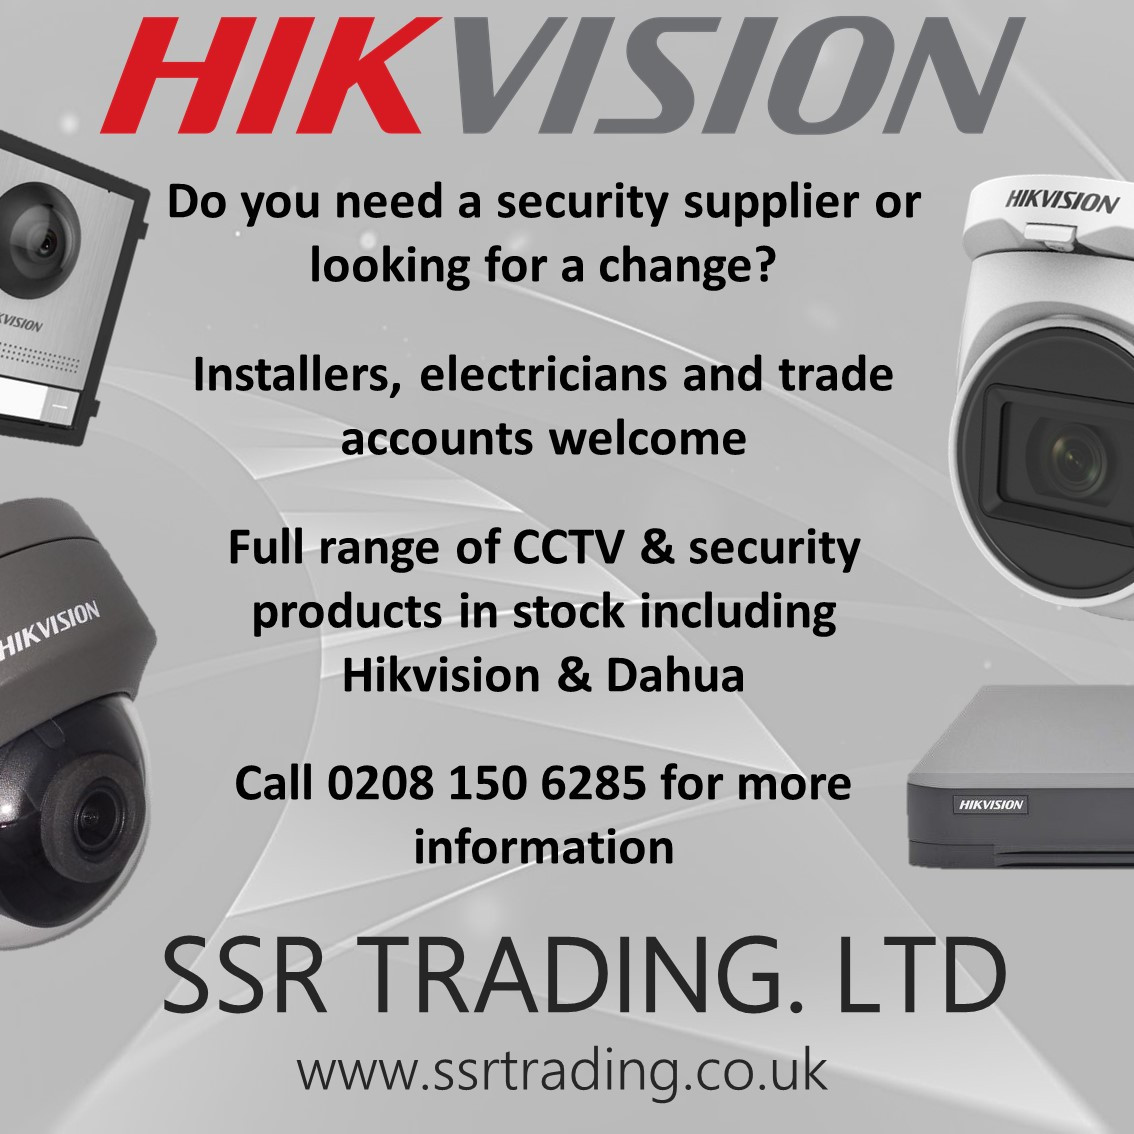 CCTV Shop in London - CCTV Shop in UK - CCTV Shop Near Me - Hikvision CCTV  Supplier in London - Hikvision Supplier in UK - Hikvision Supplier in  Central London -